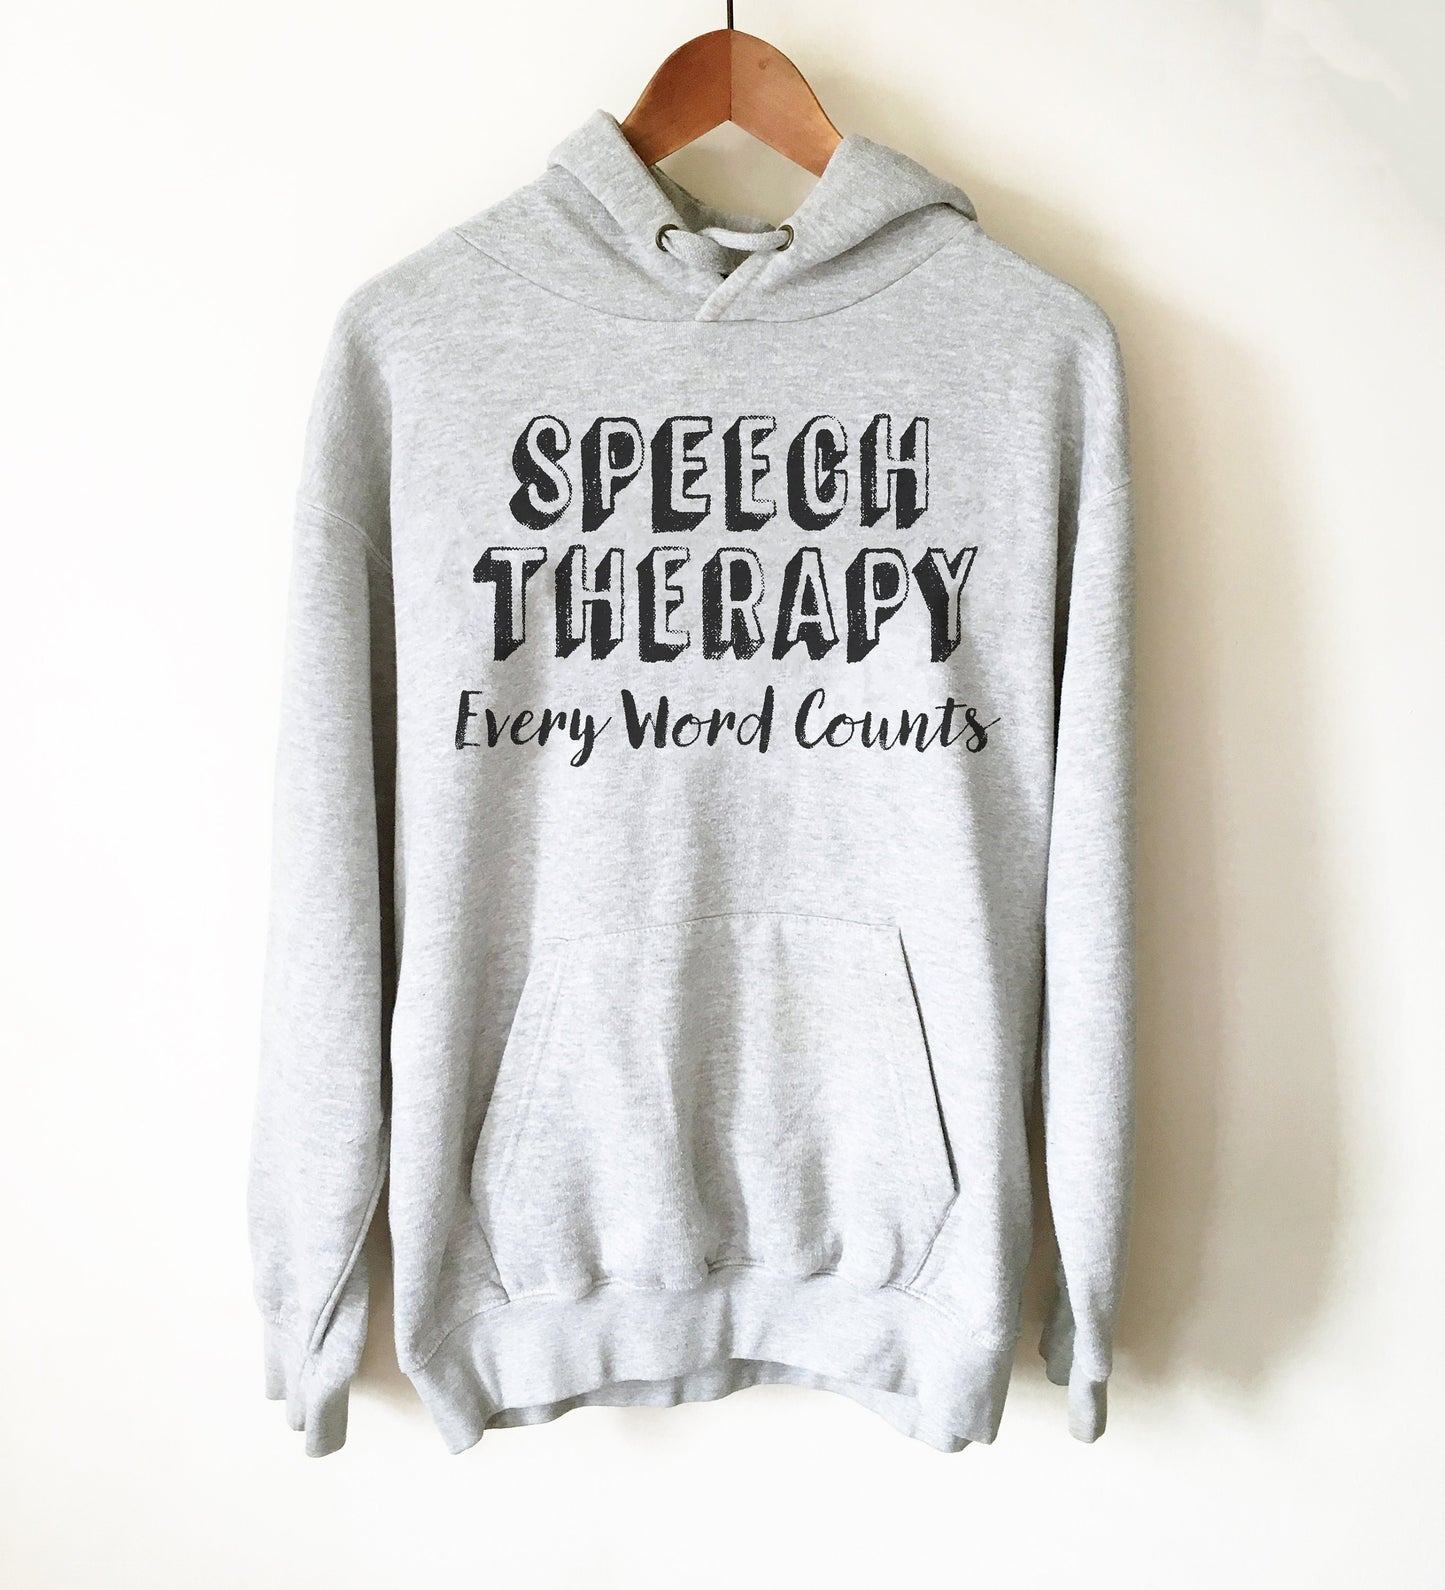 Speech Therapy Every Word Counts Hoodie - SLP Shirt, Speech Language Pathologist Gift, Speech Pathologist, Speech Therapist Gift, Graduation